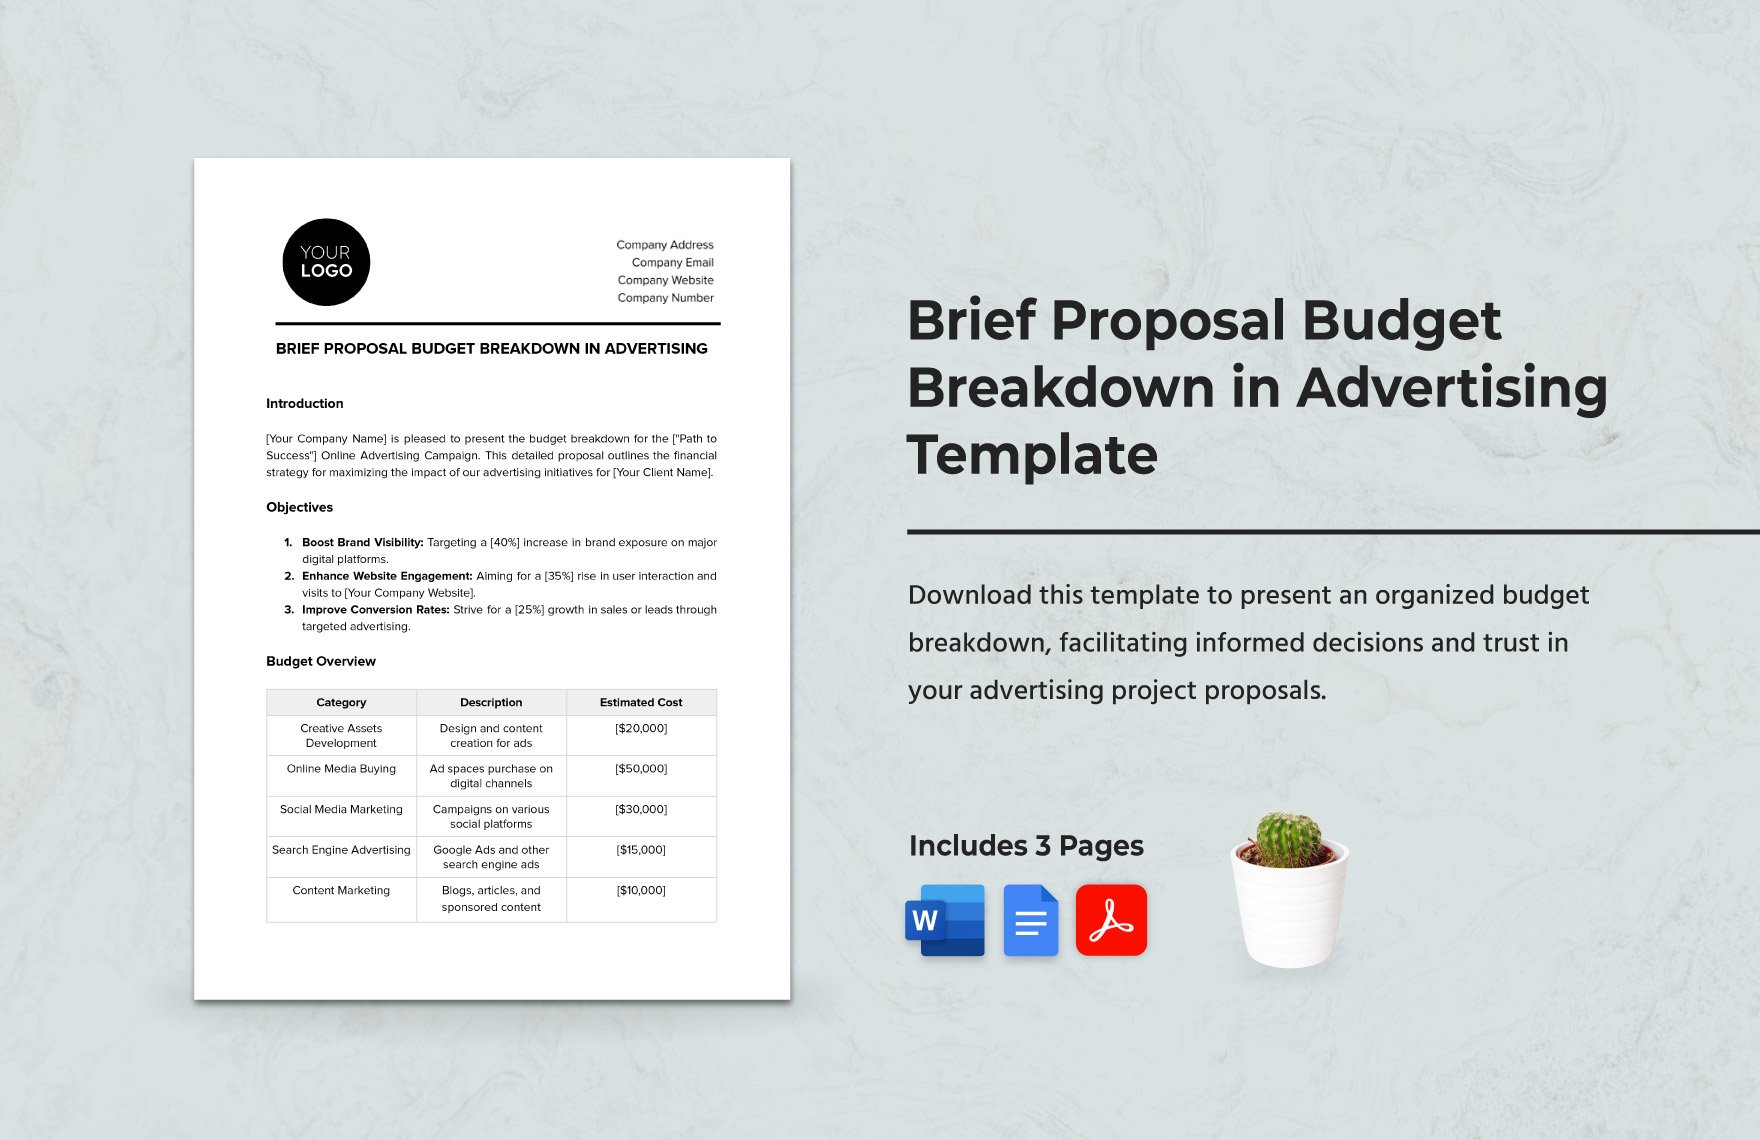 Brief Proposal Budget Breakdown in Advertising Template in Word, Google Docs, PDF